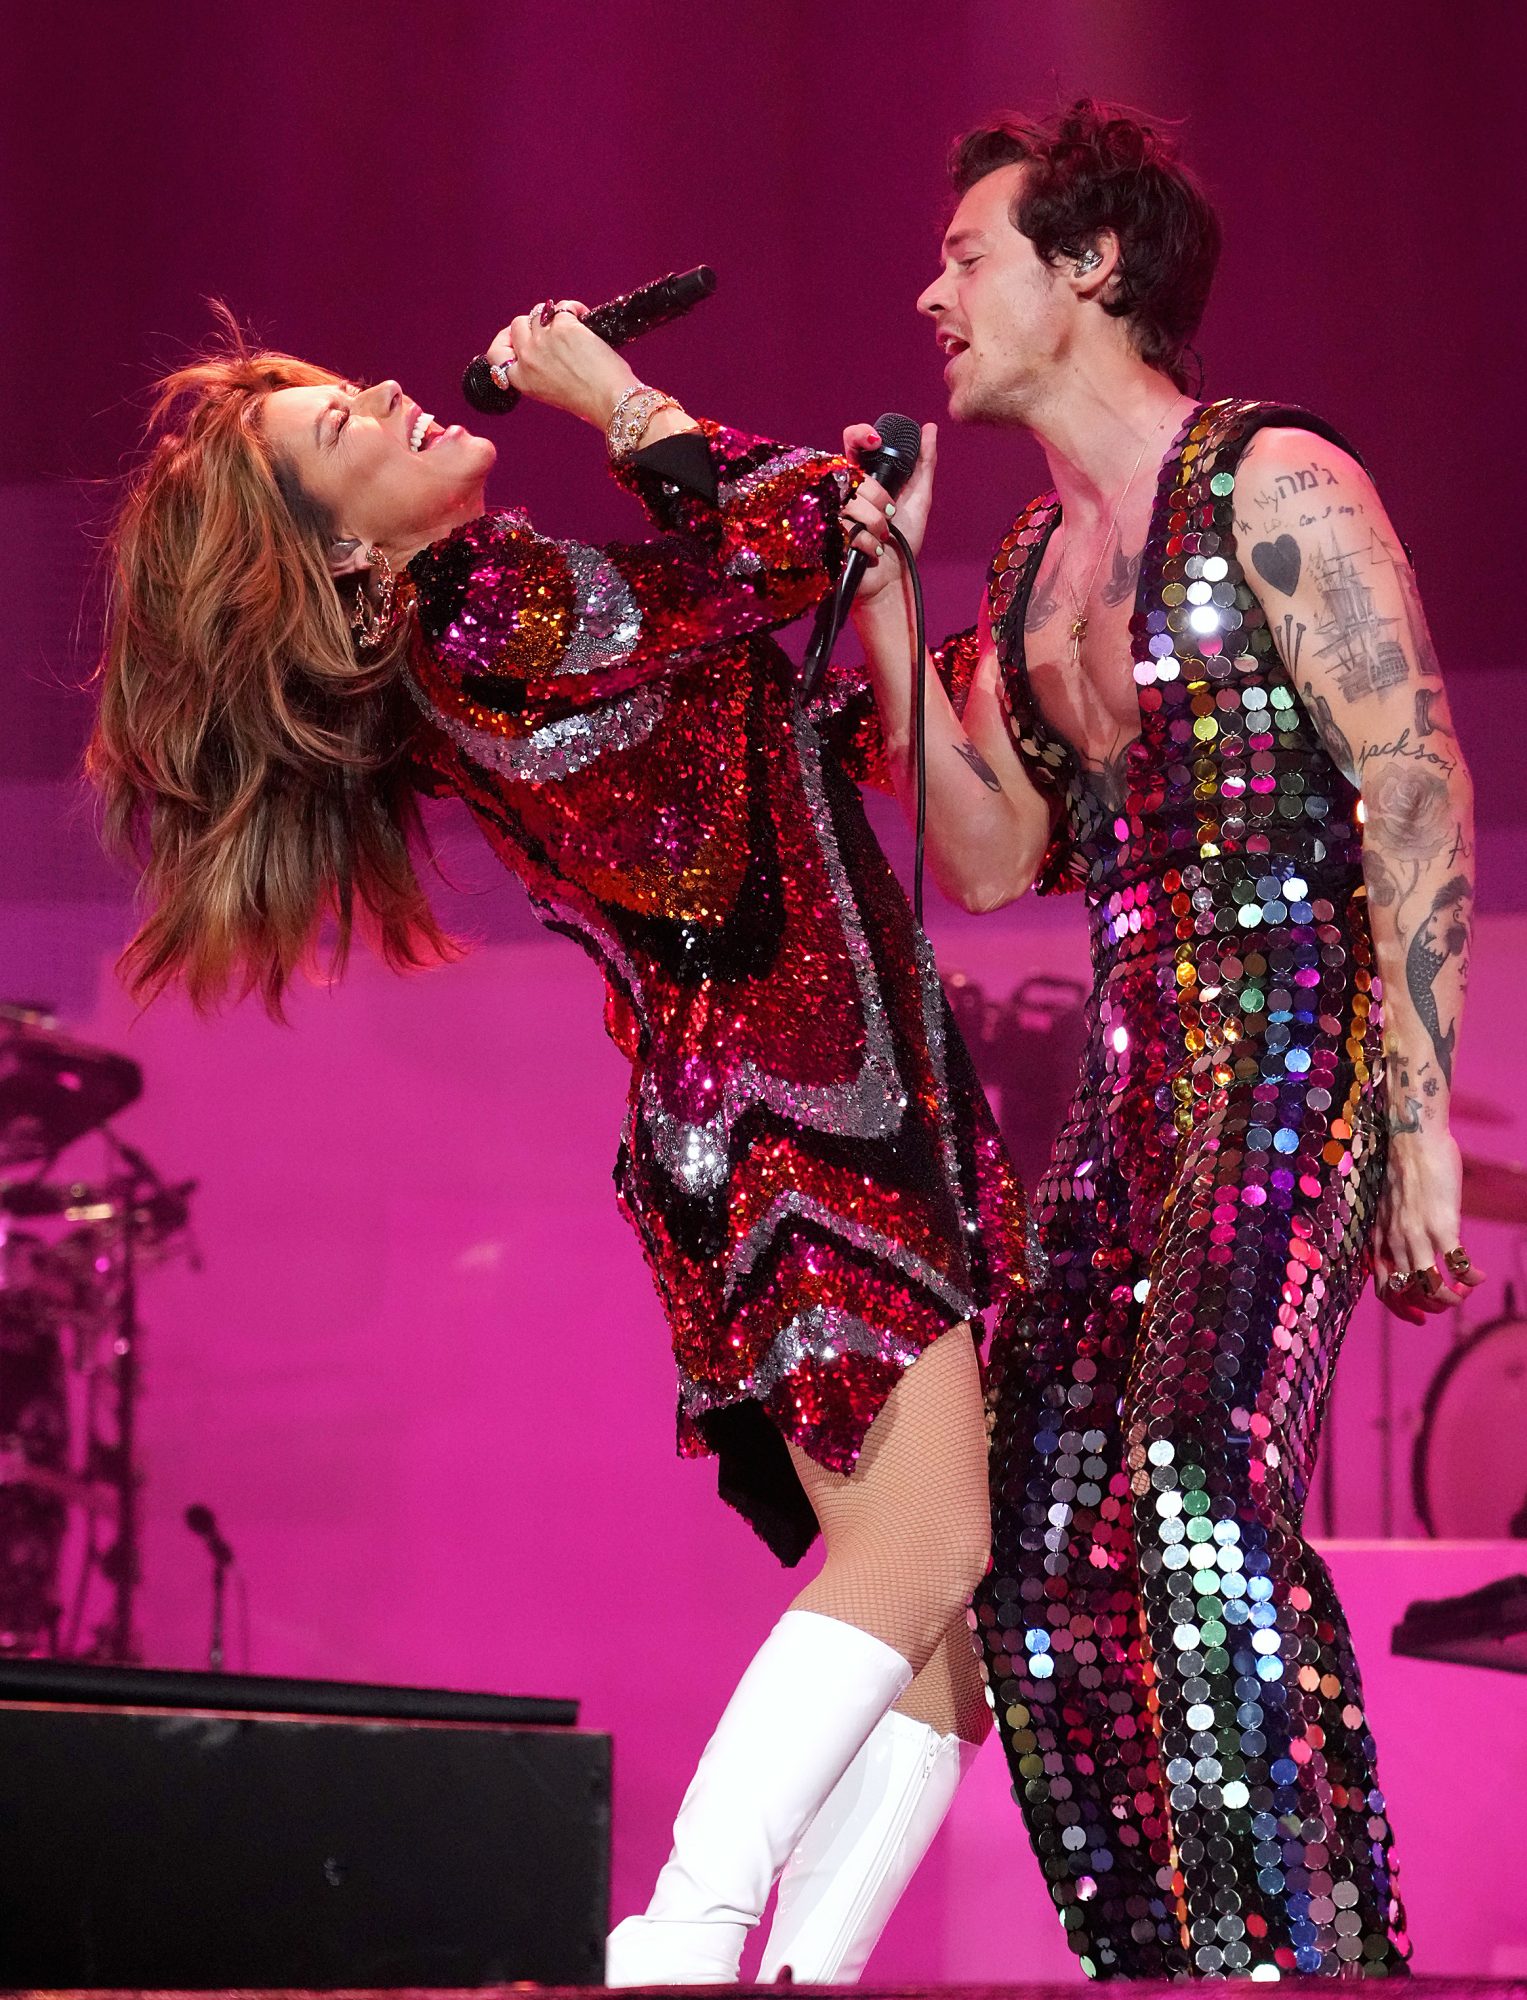 Harry Styles performing with Shania Twain at Coachella.